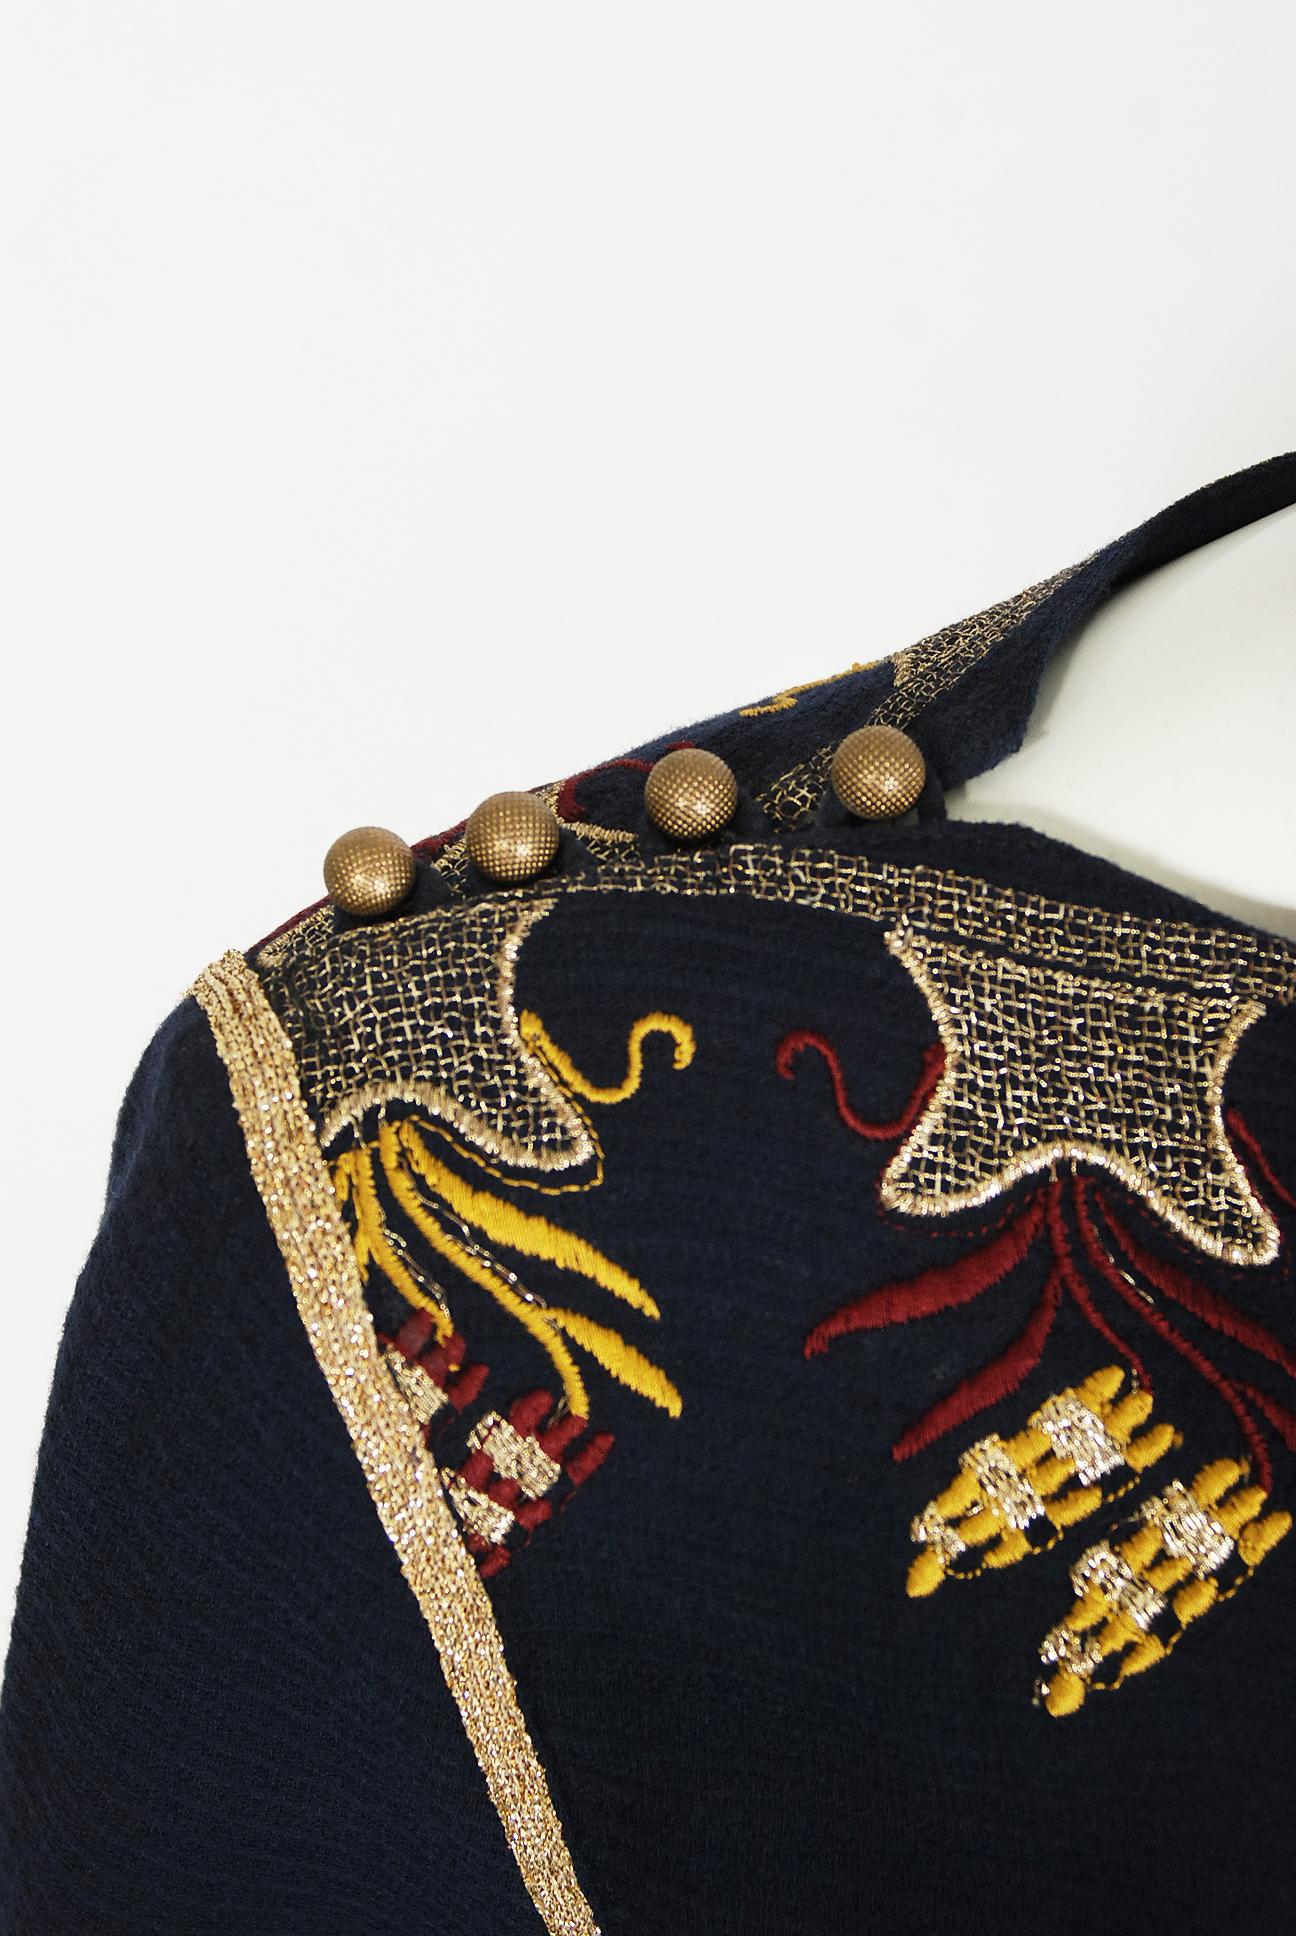 Women's Vintage 1979 Karl Lagerfeld for Chloe Navy Blue Metallic Embroidered Knit Dress